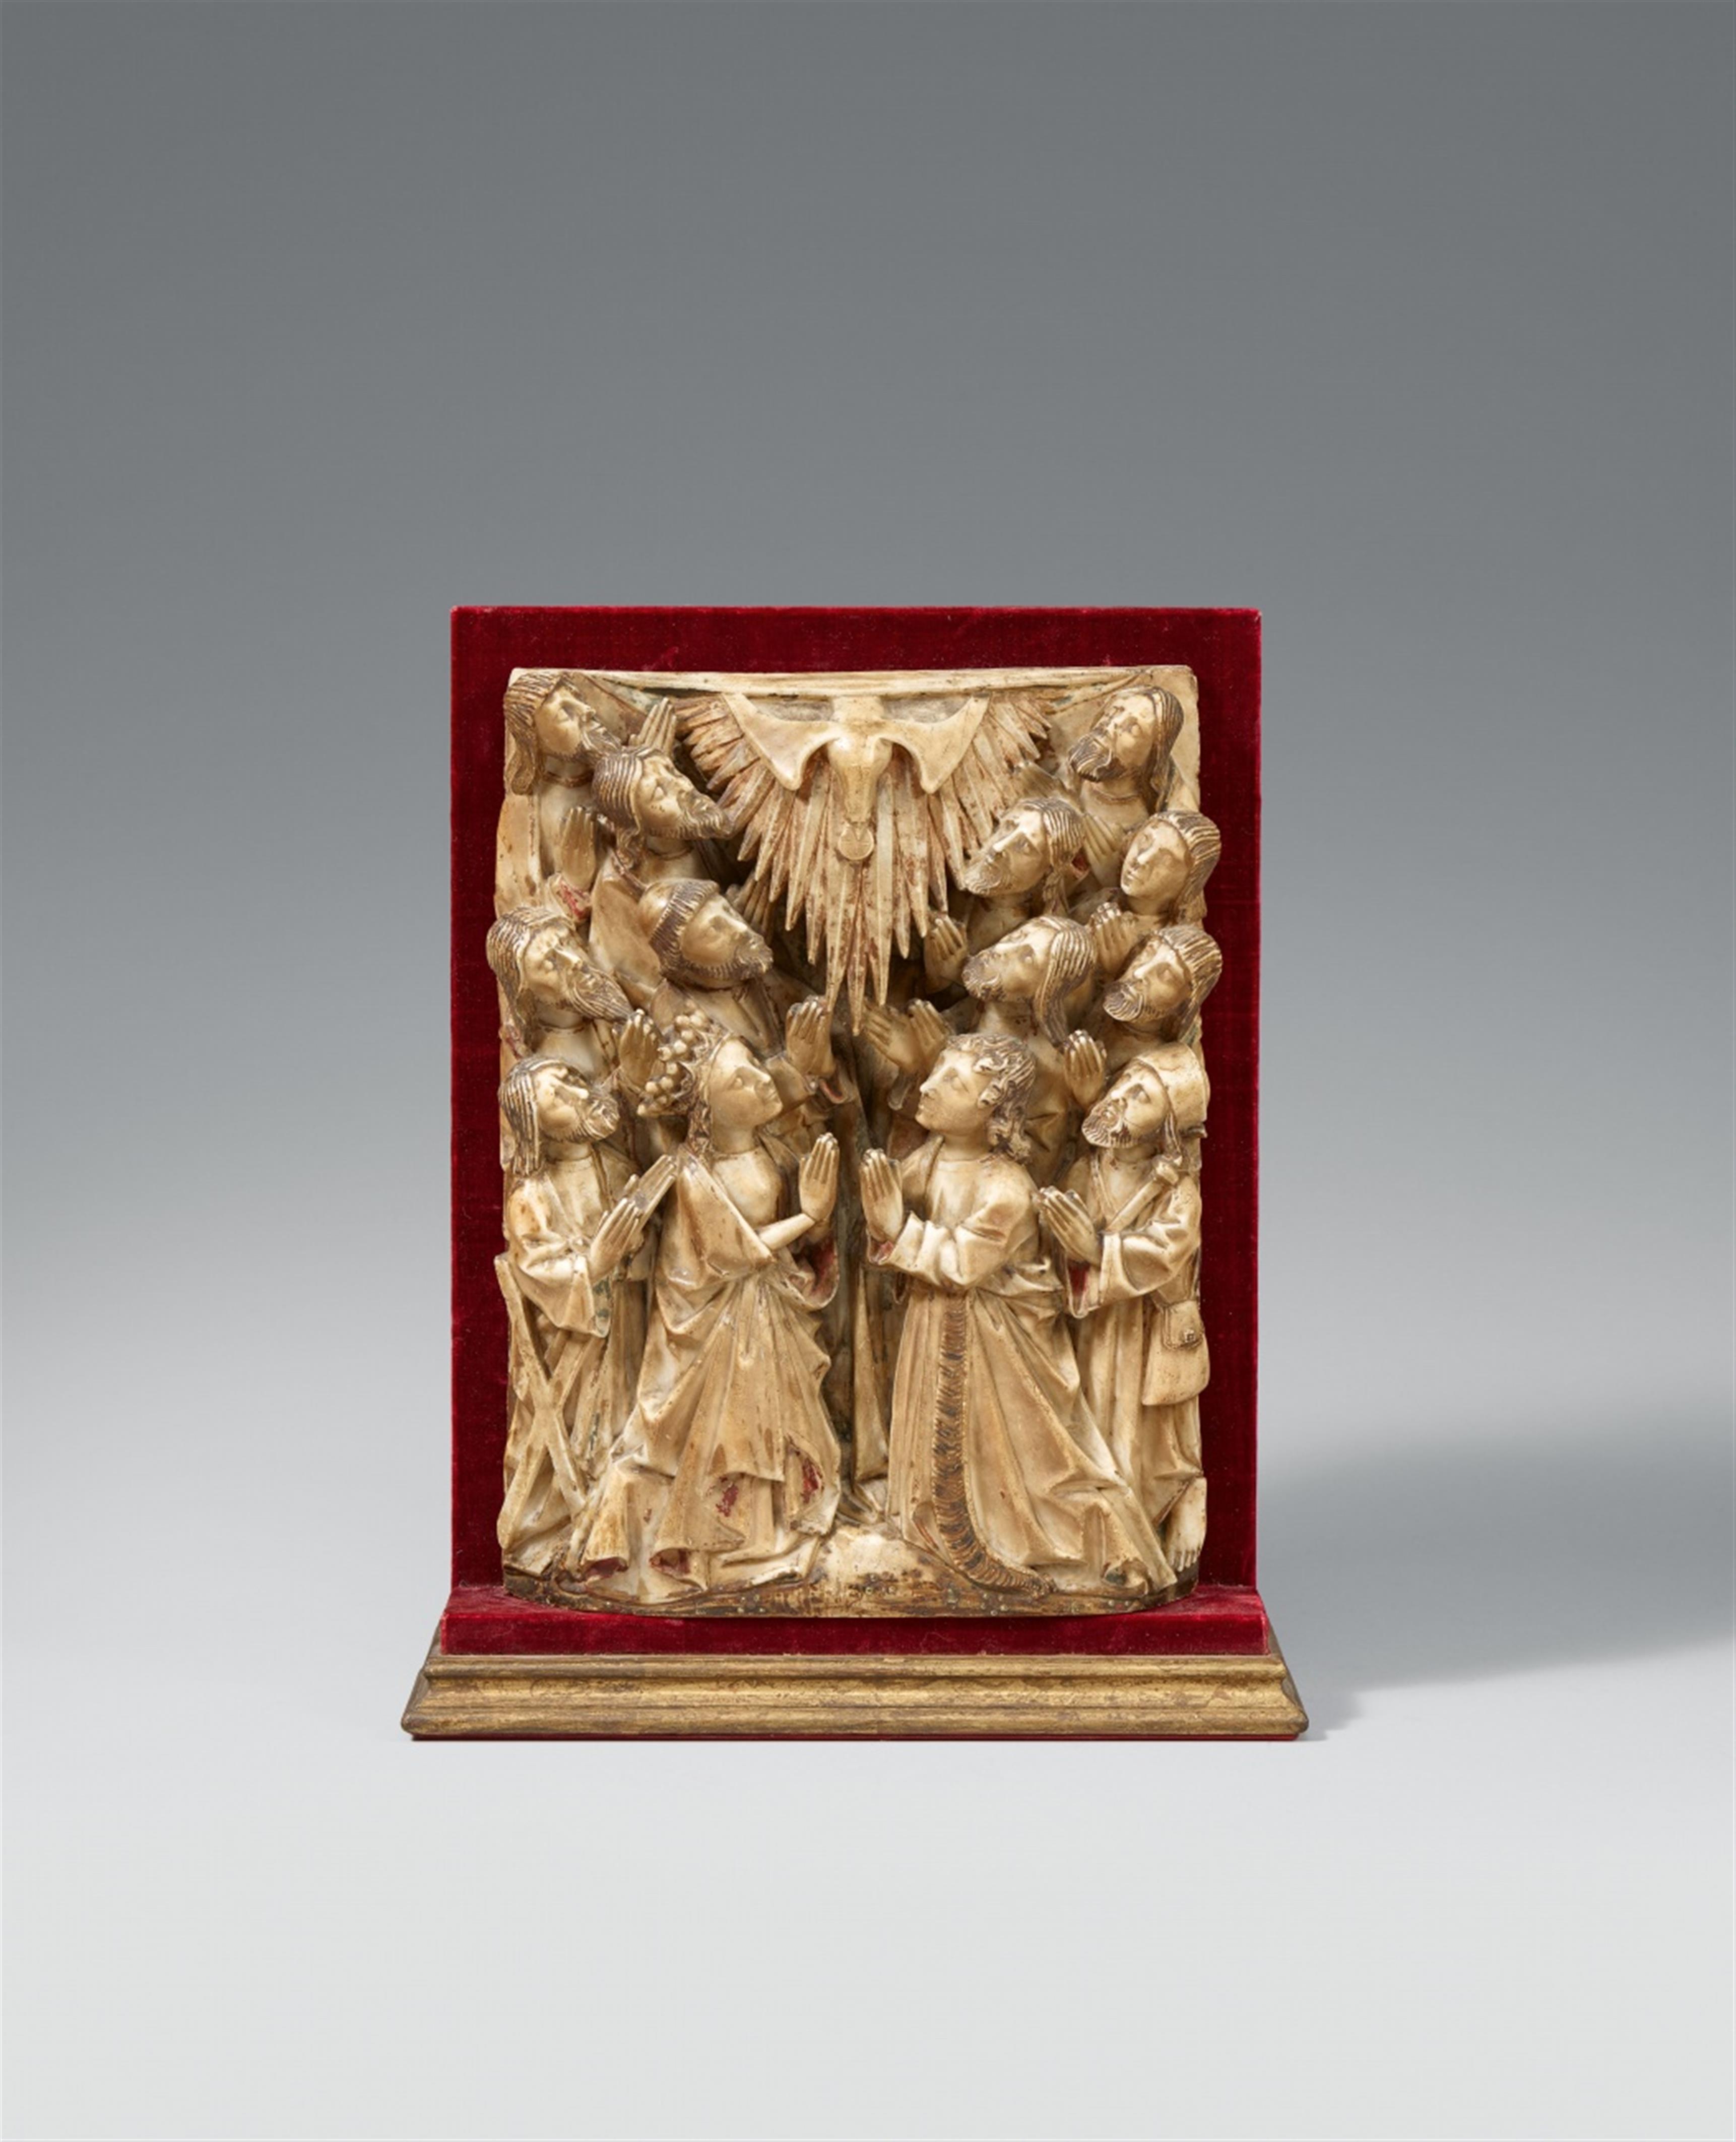 Nottingham mid-15th century - A mid-15th century Nottingham ivory pentecost relief - image-1